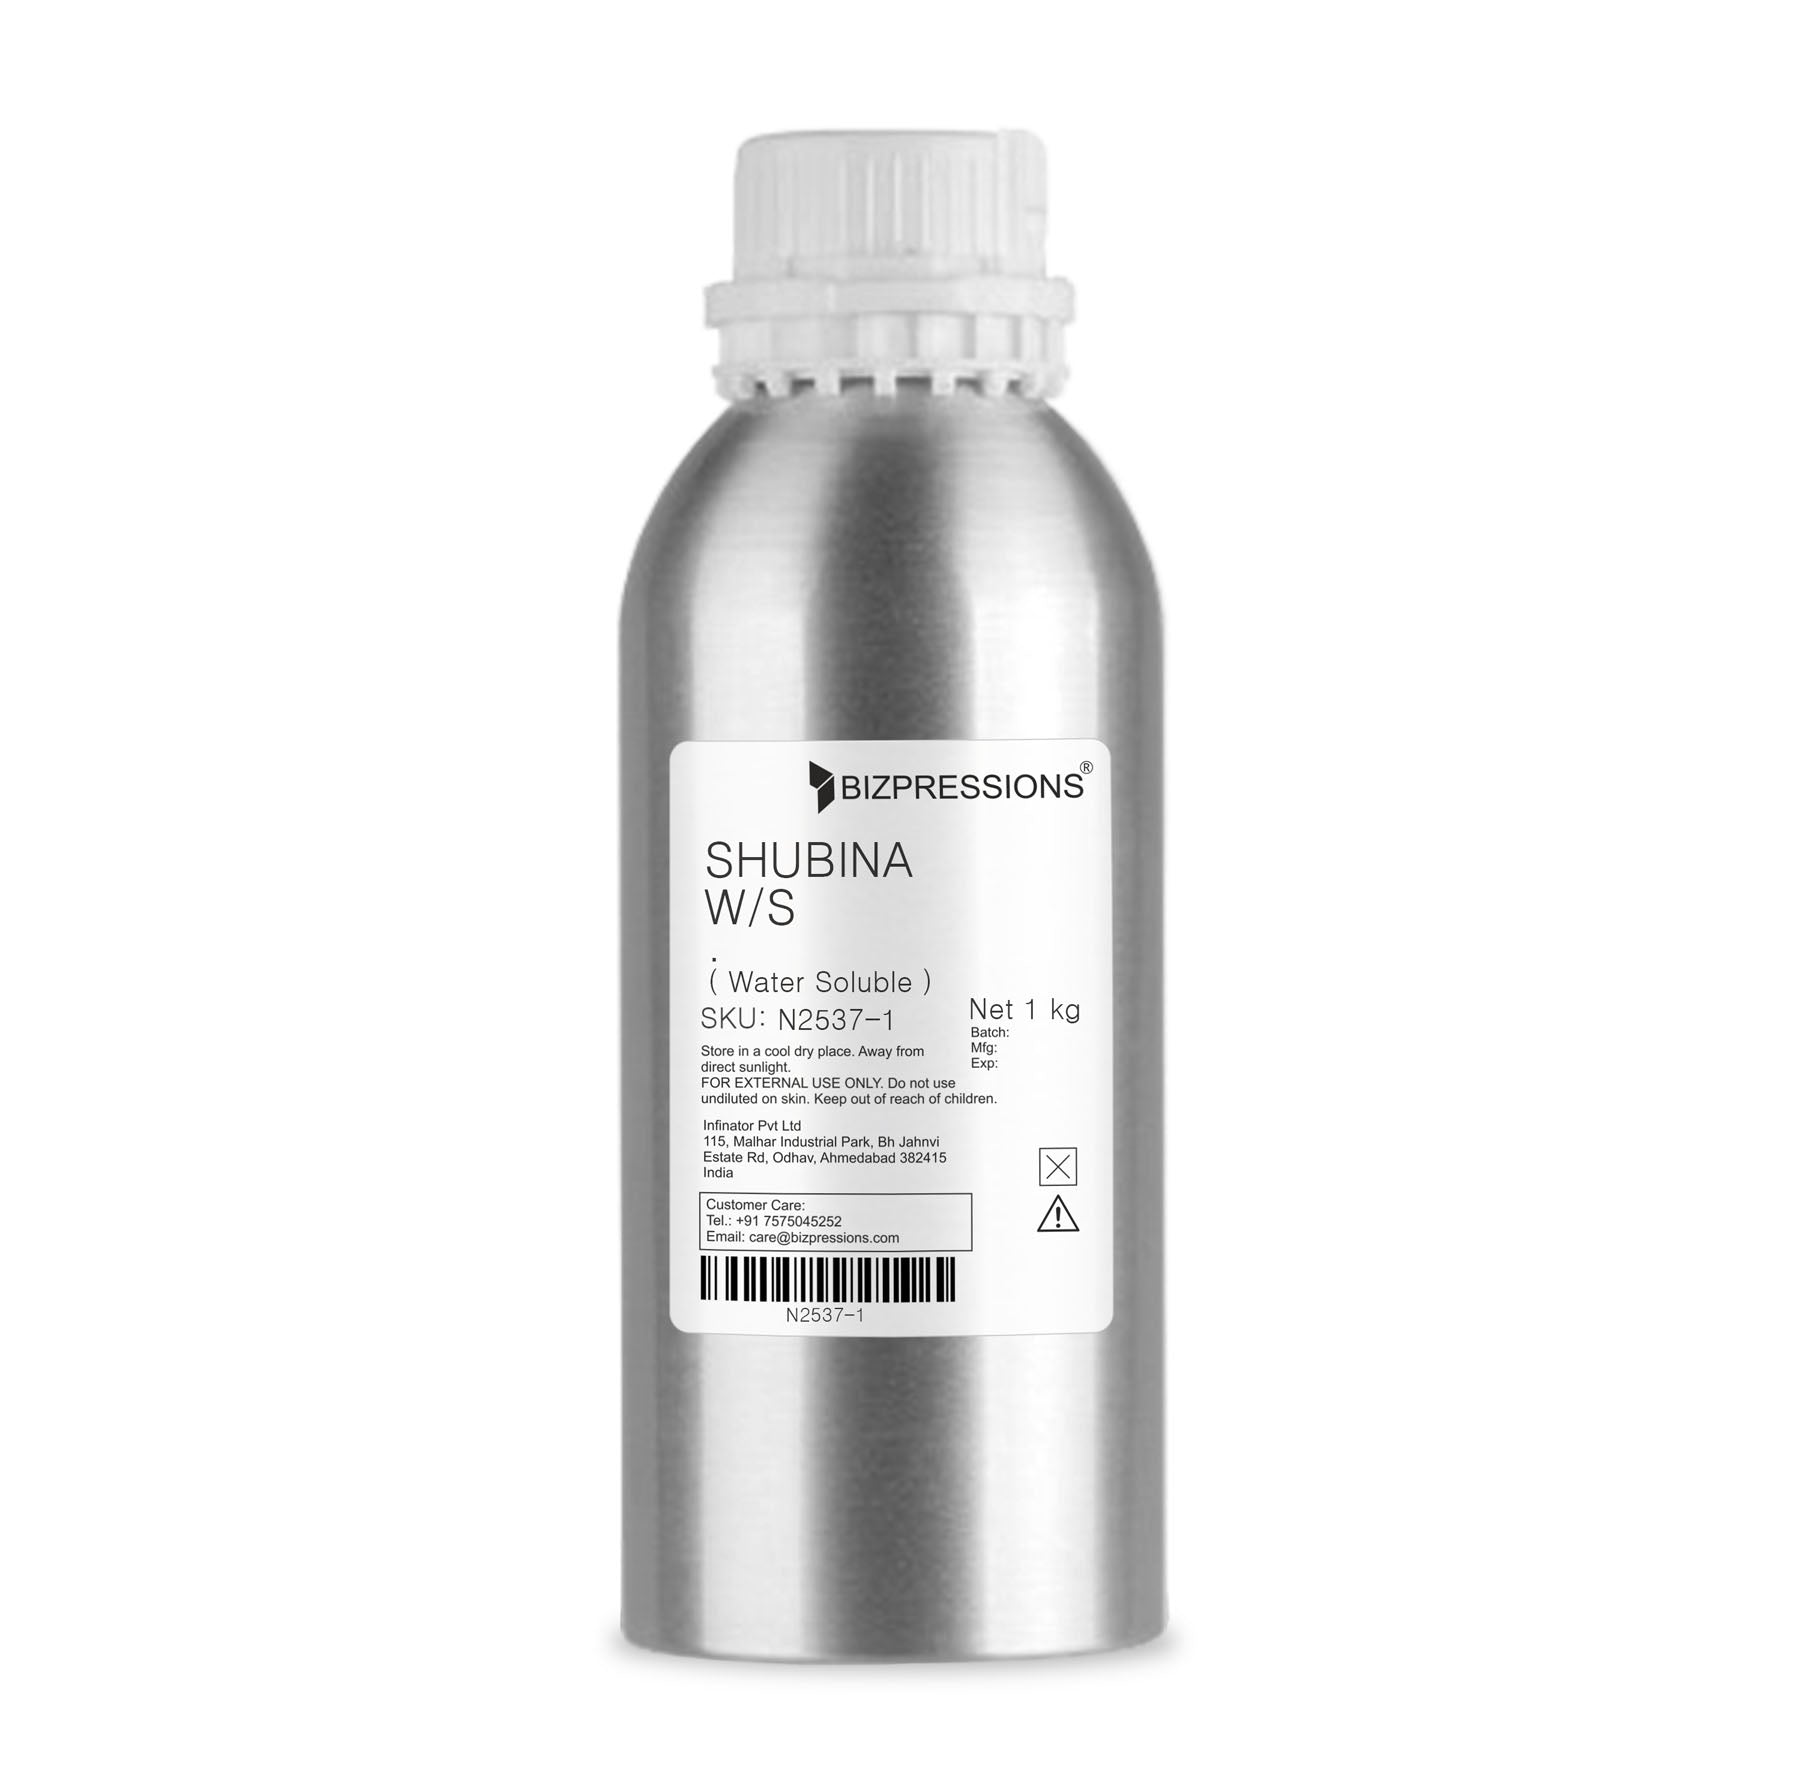 SHUBINA W/S - Fragrance ( Water Soluble ) - 1 kg